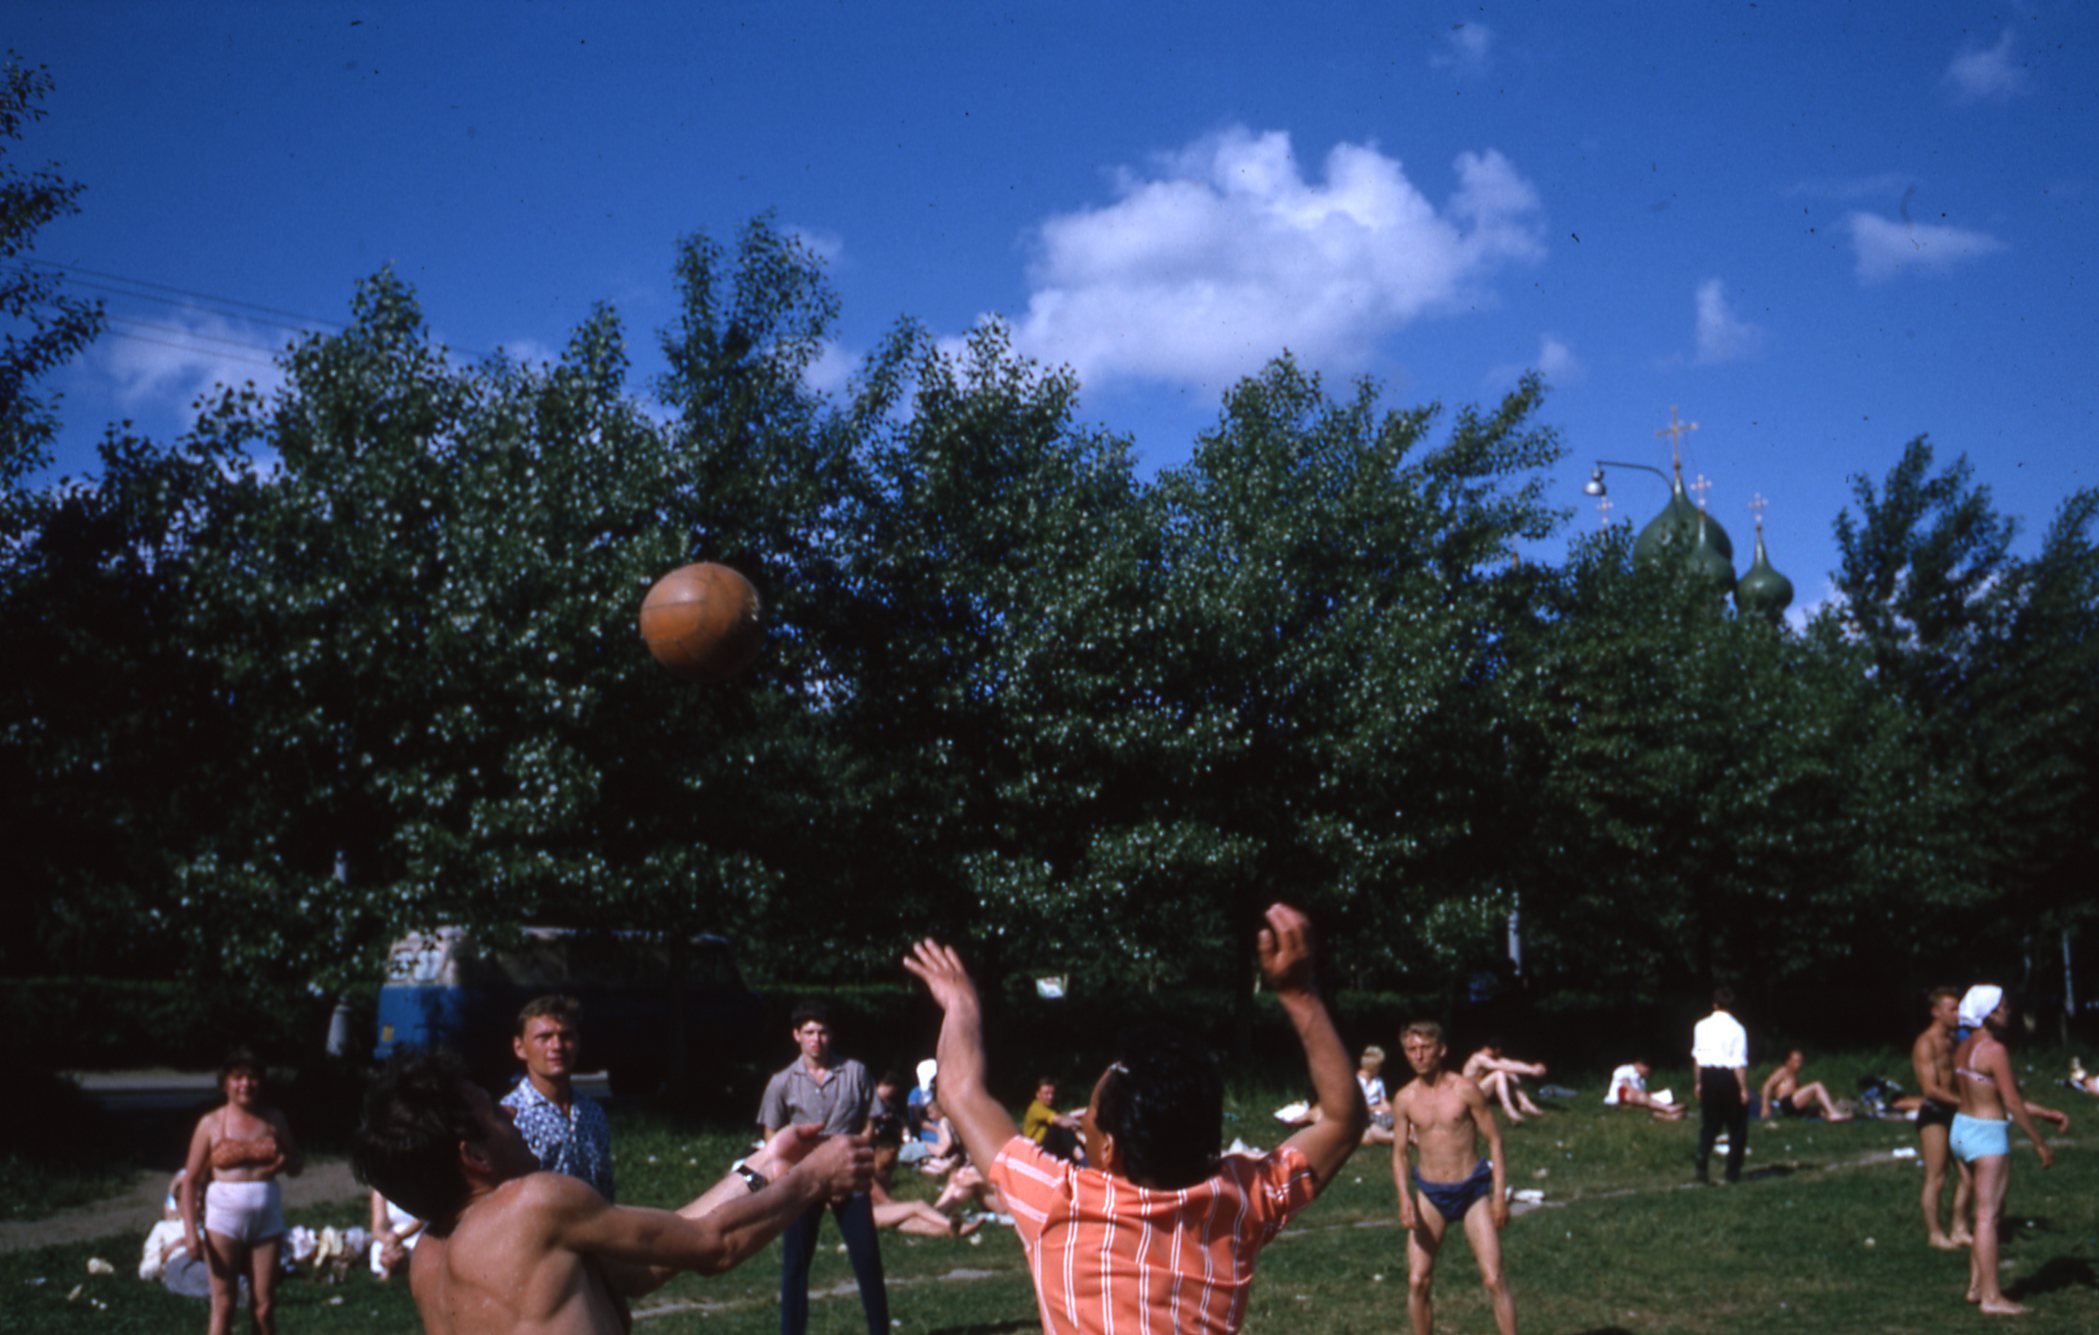 MA10 Ostankino people sunbathing and fishing © Thomas T. Hammond / University of Virginia